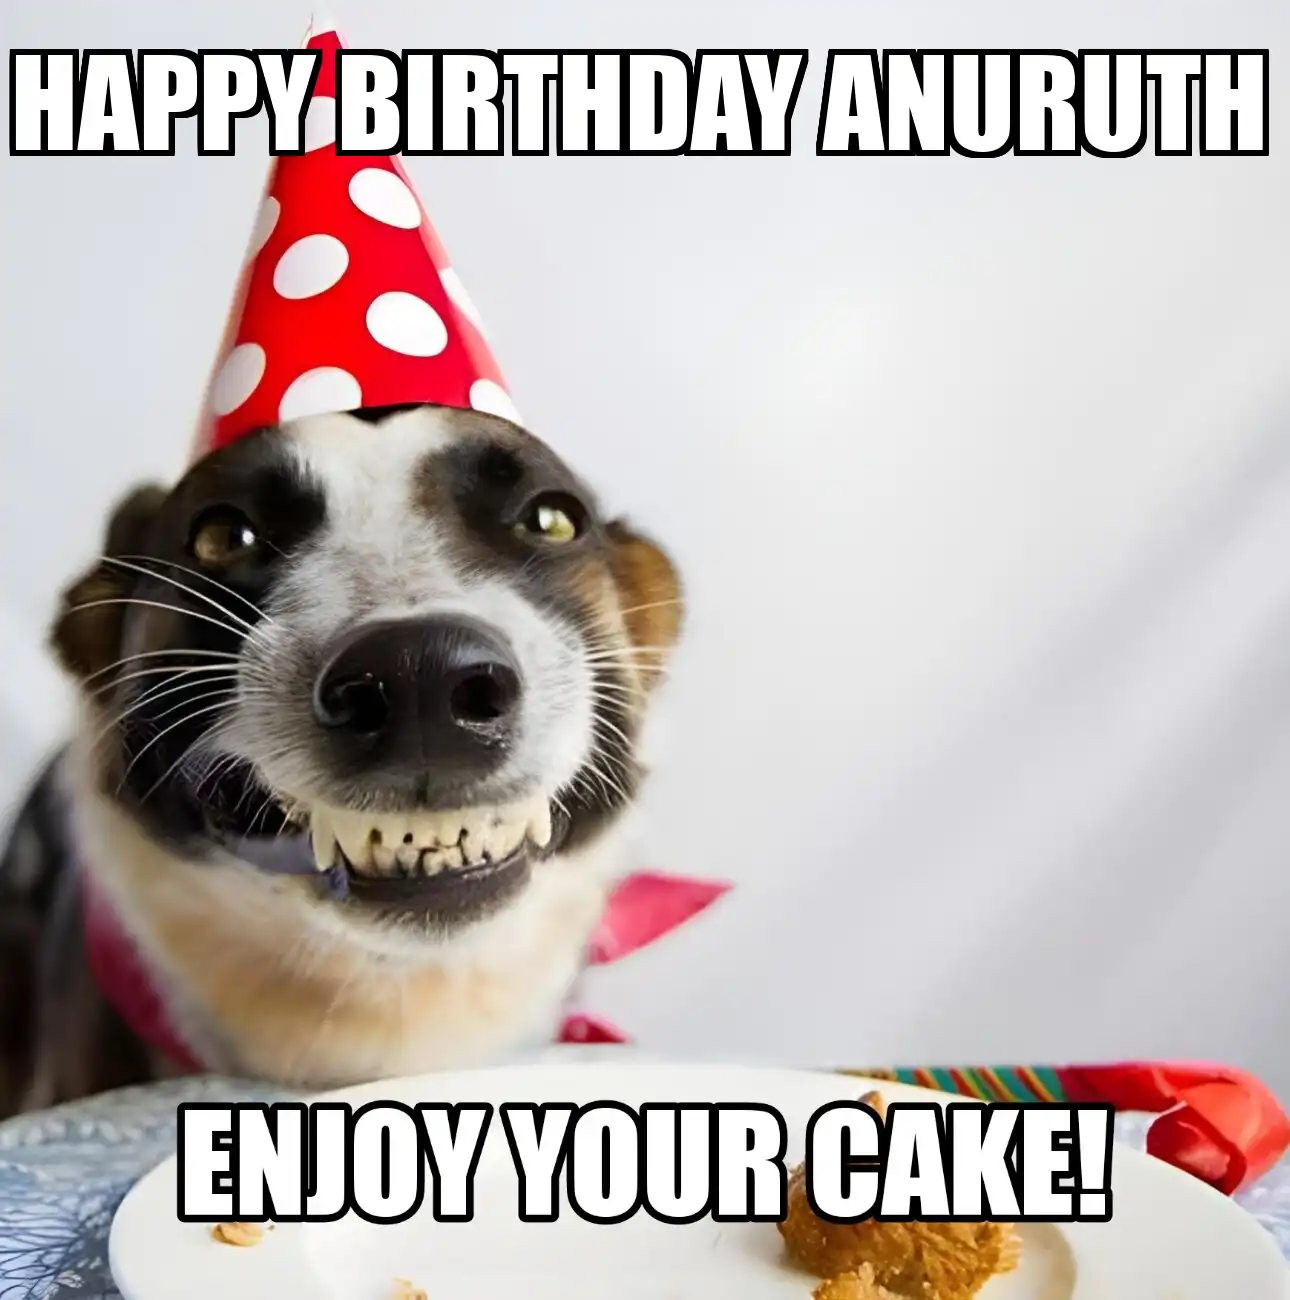 Happy Birthday Anuruth Enjoy Your Cake Dog Meme